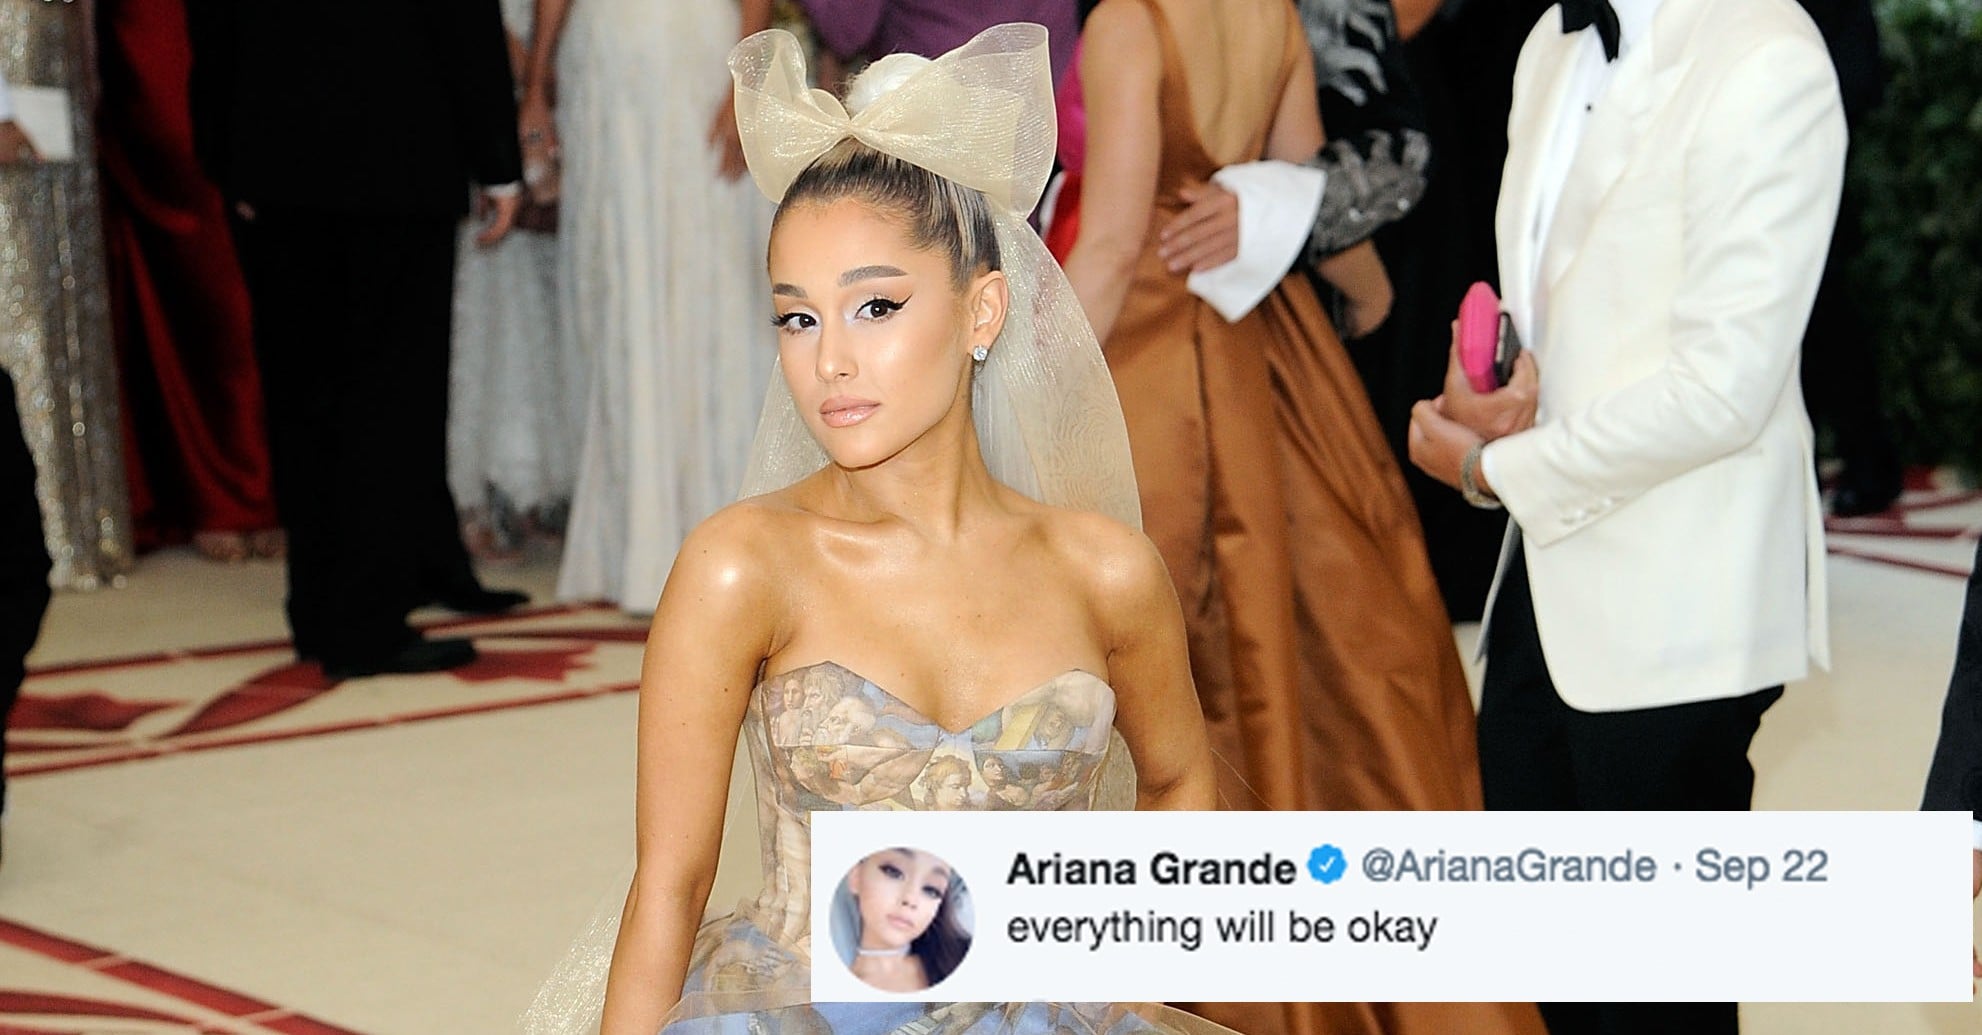 Ariana Grande Tweets About Everything Being Okay 2018 | POPSUGAR Celebrity